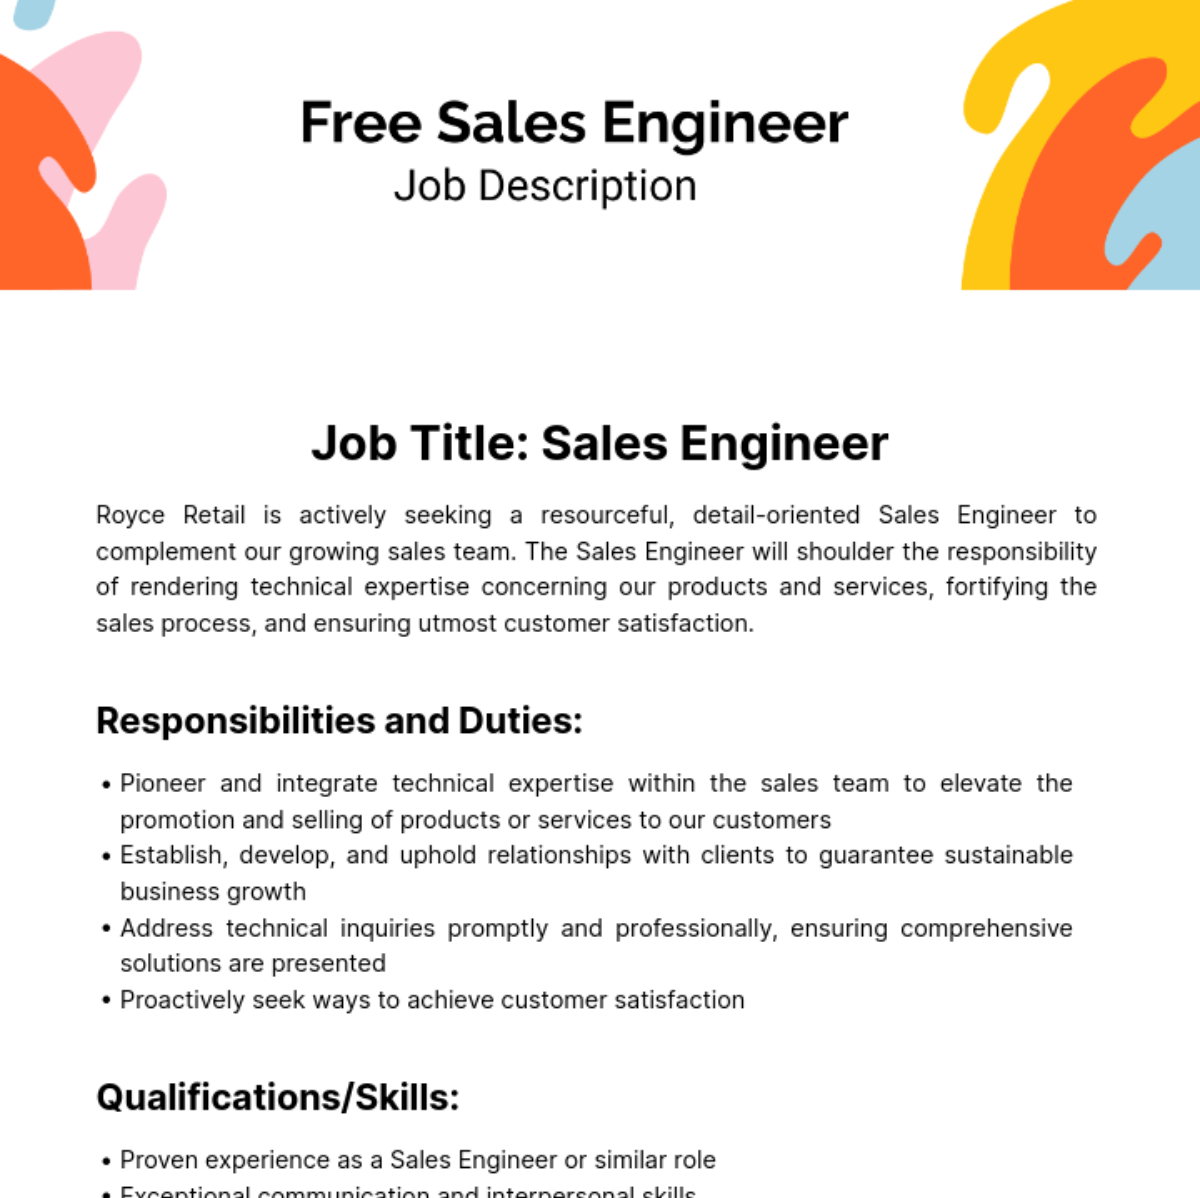 Free Sales Engineer Job Description Template